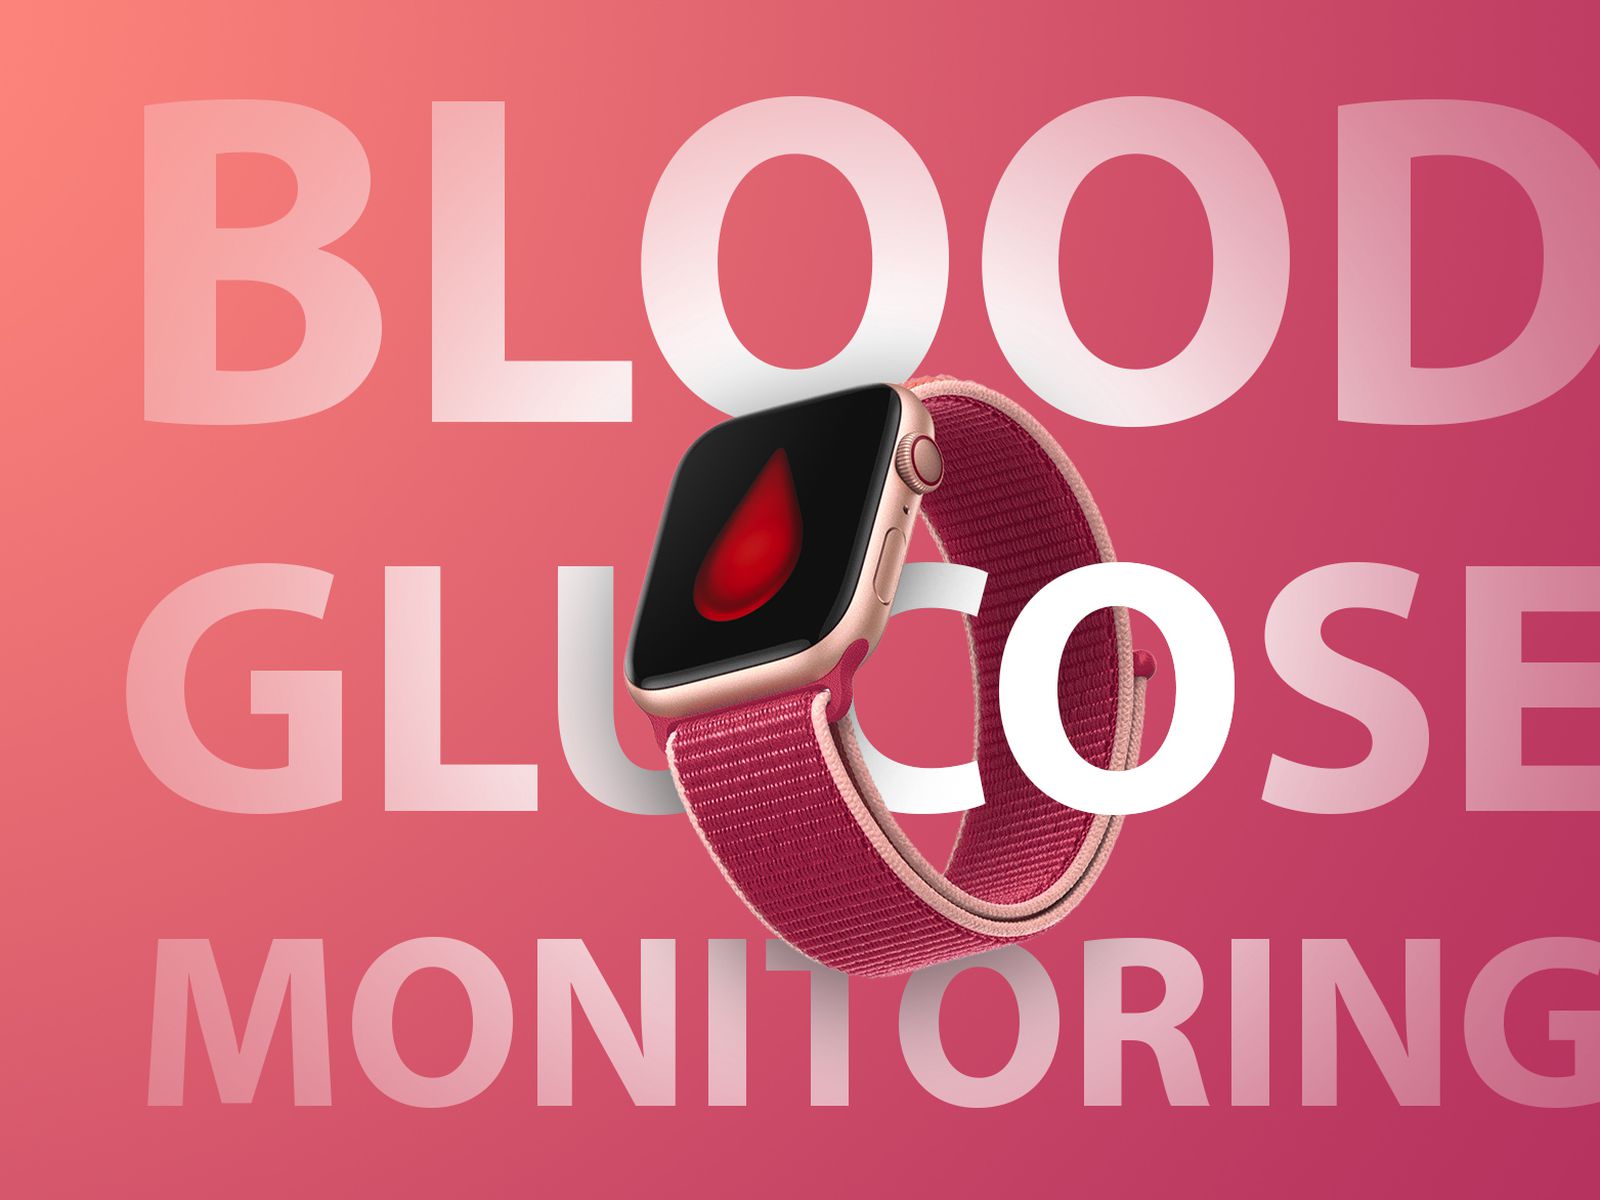 Apple Watch Series 8: no blood pressure monitor or blood glucose sensor